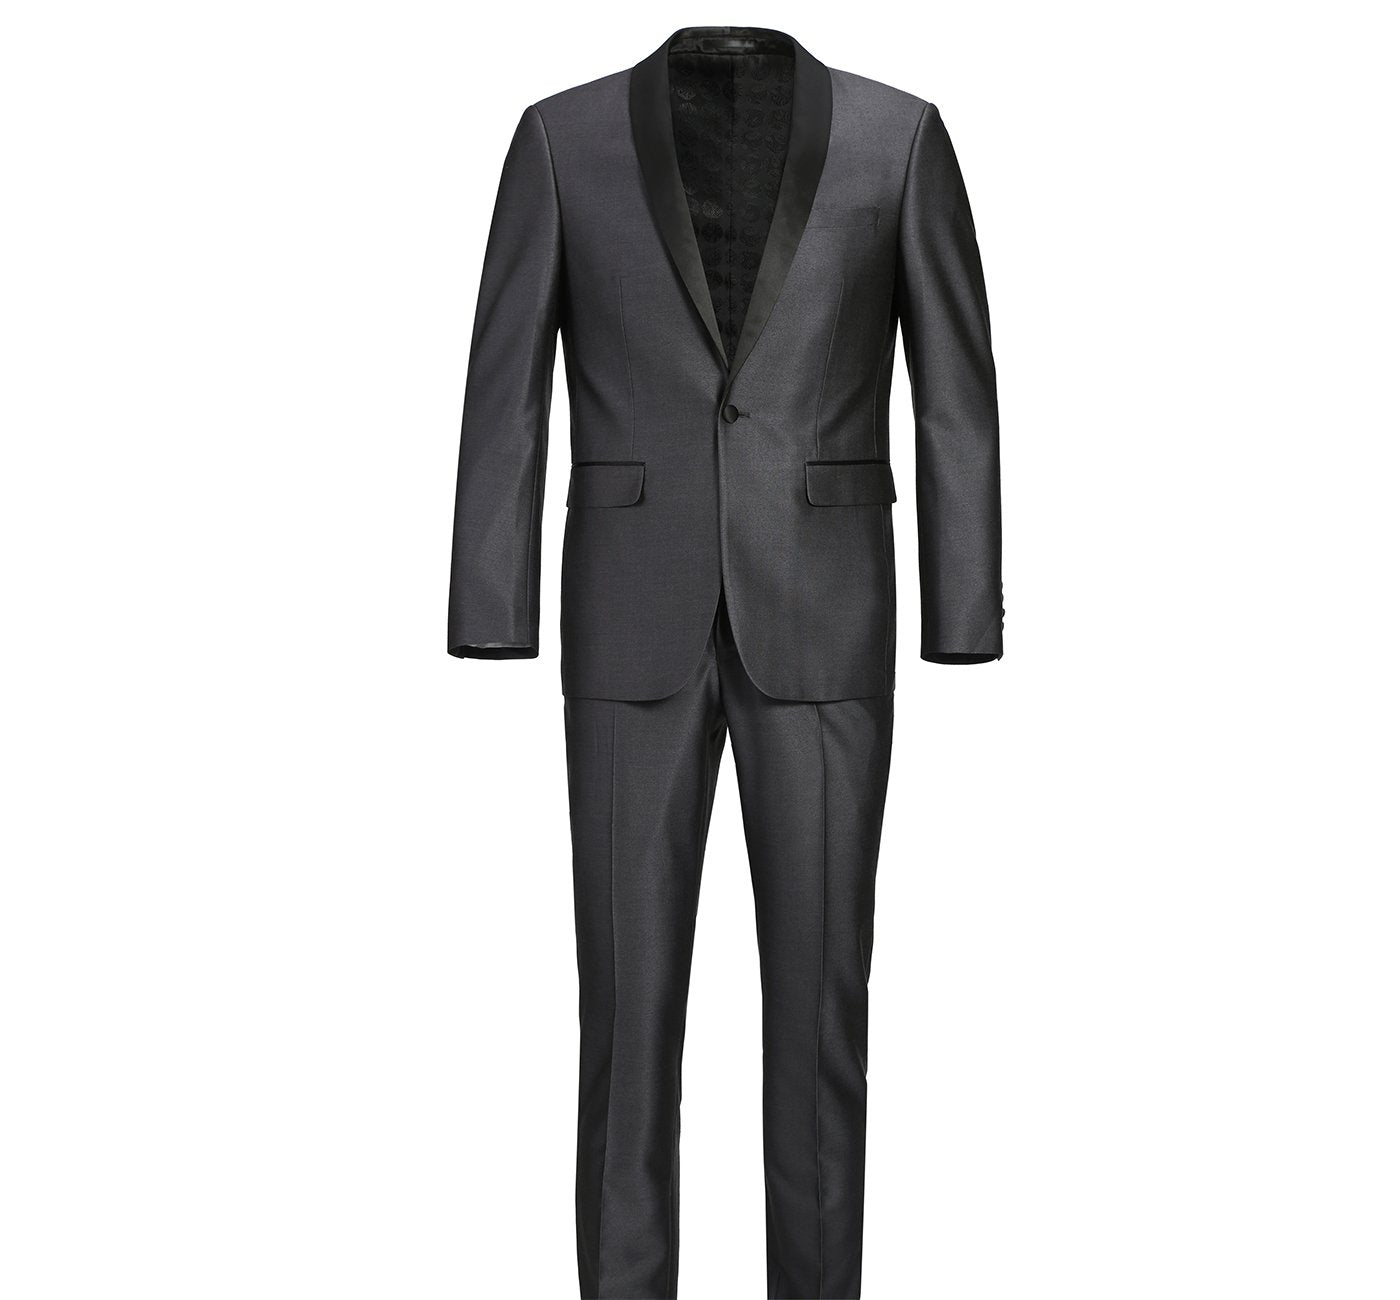 201-17 Men's Black/Grey Sharkskin with Black Satin Shawl Lapel Slim Fit 2-Piece Tuxedo